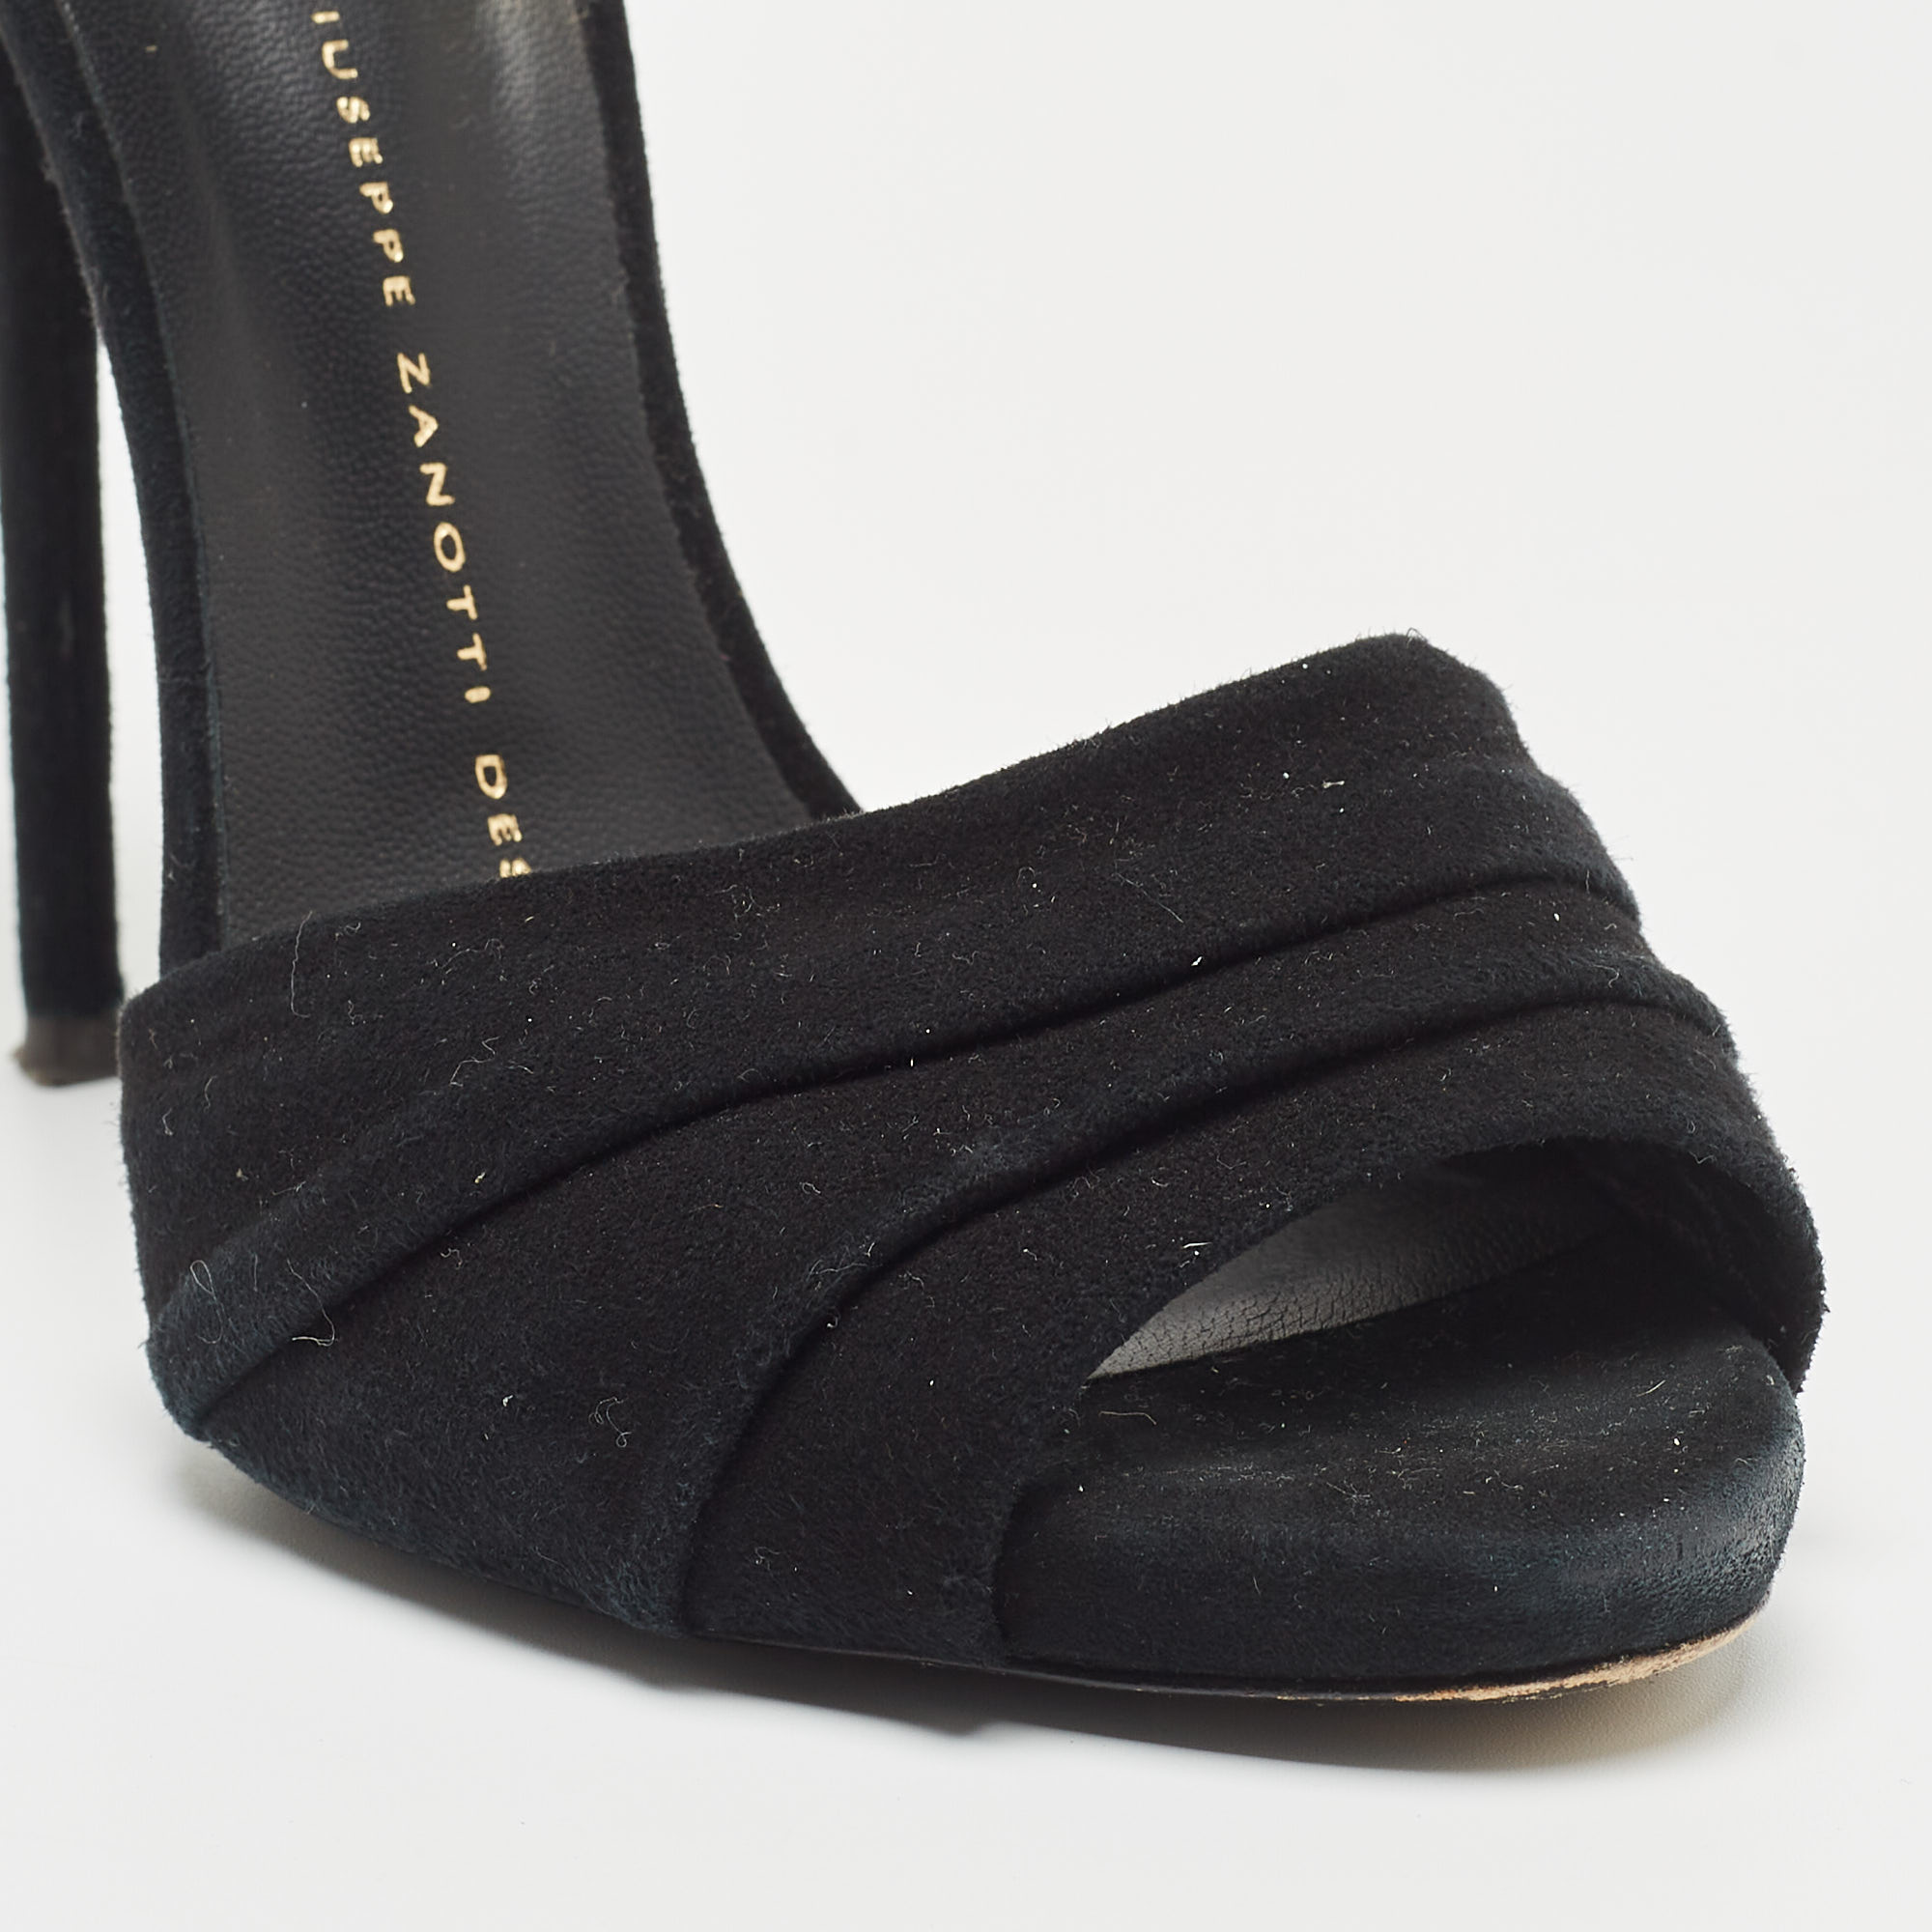 Giuseppe Zanotti Black Suede Buckle Detail Sandals Size 36